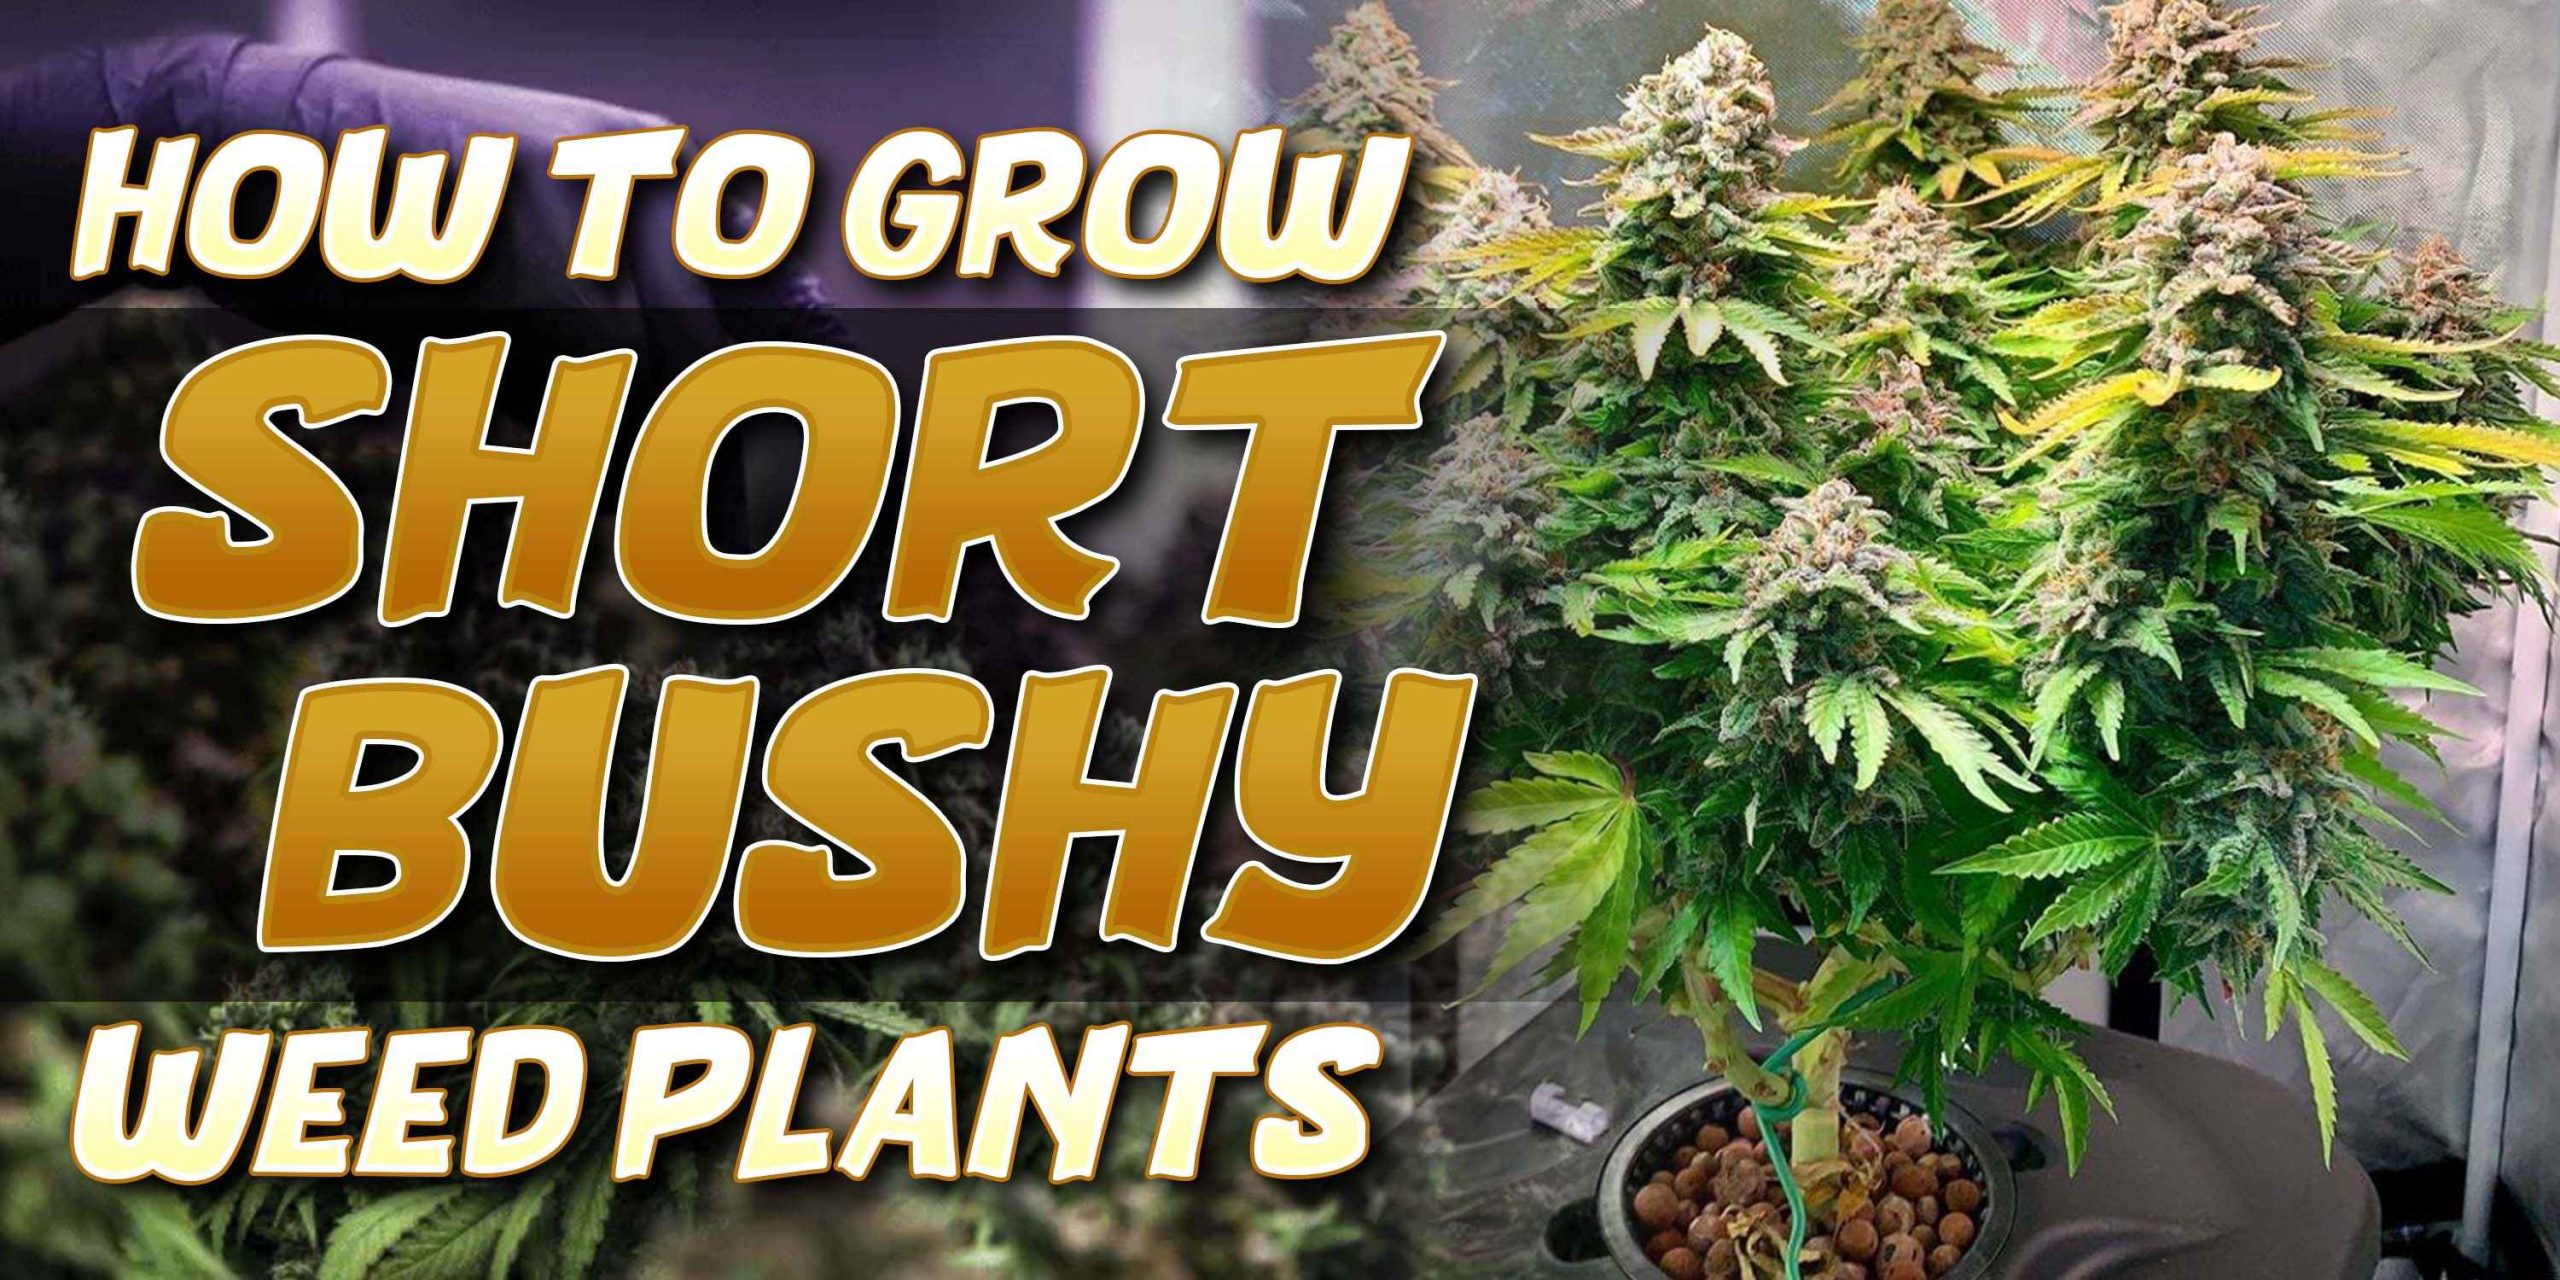 How to Grow Short Bushy Weed Plants